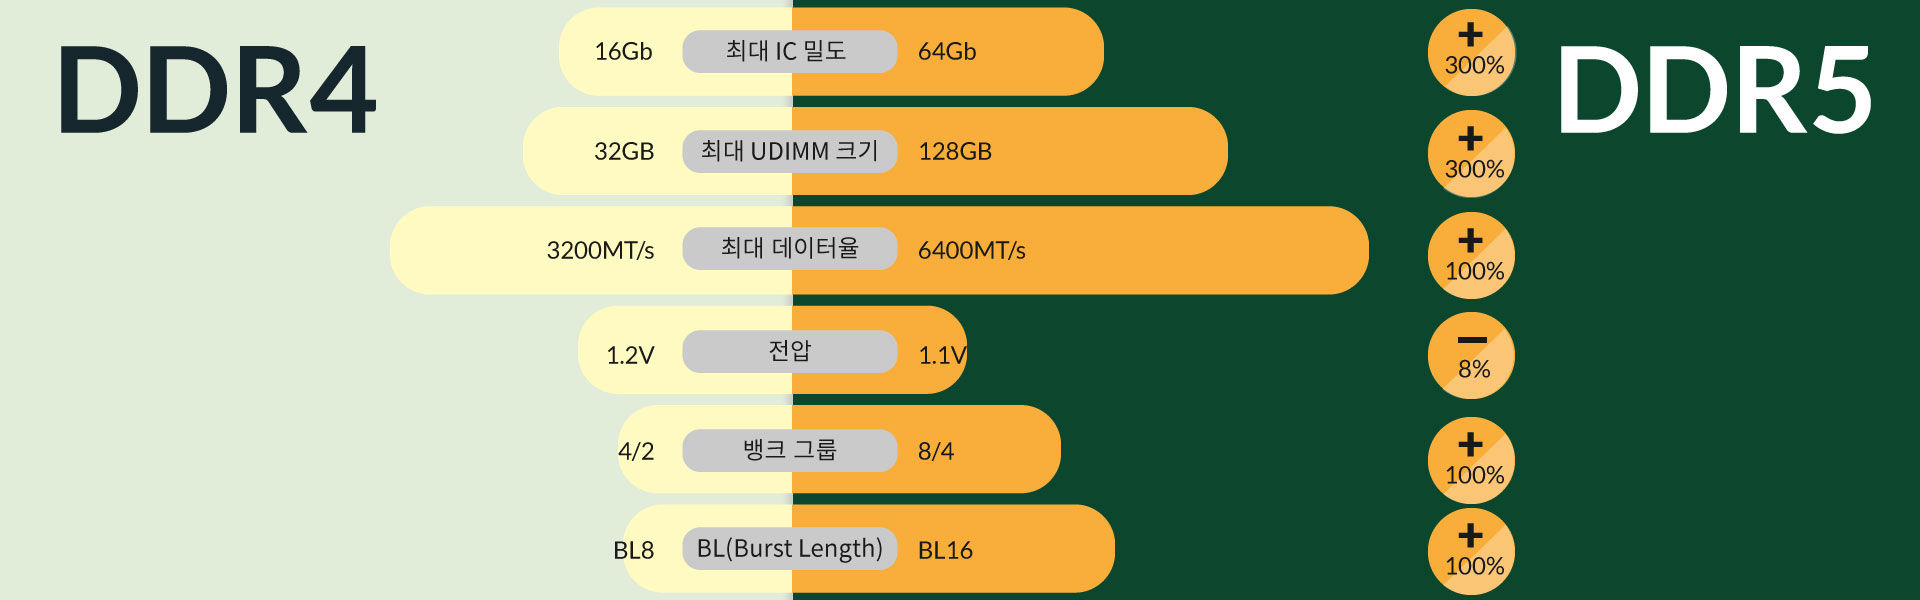 DDR4와 DDR5 간의 주요 특징 차이 